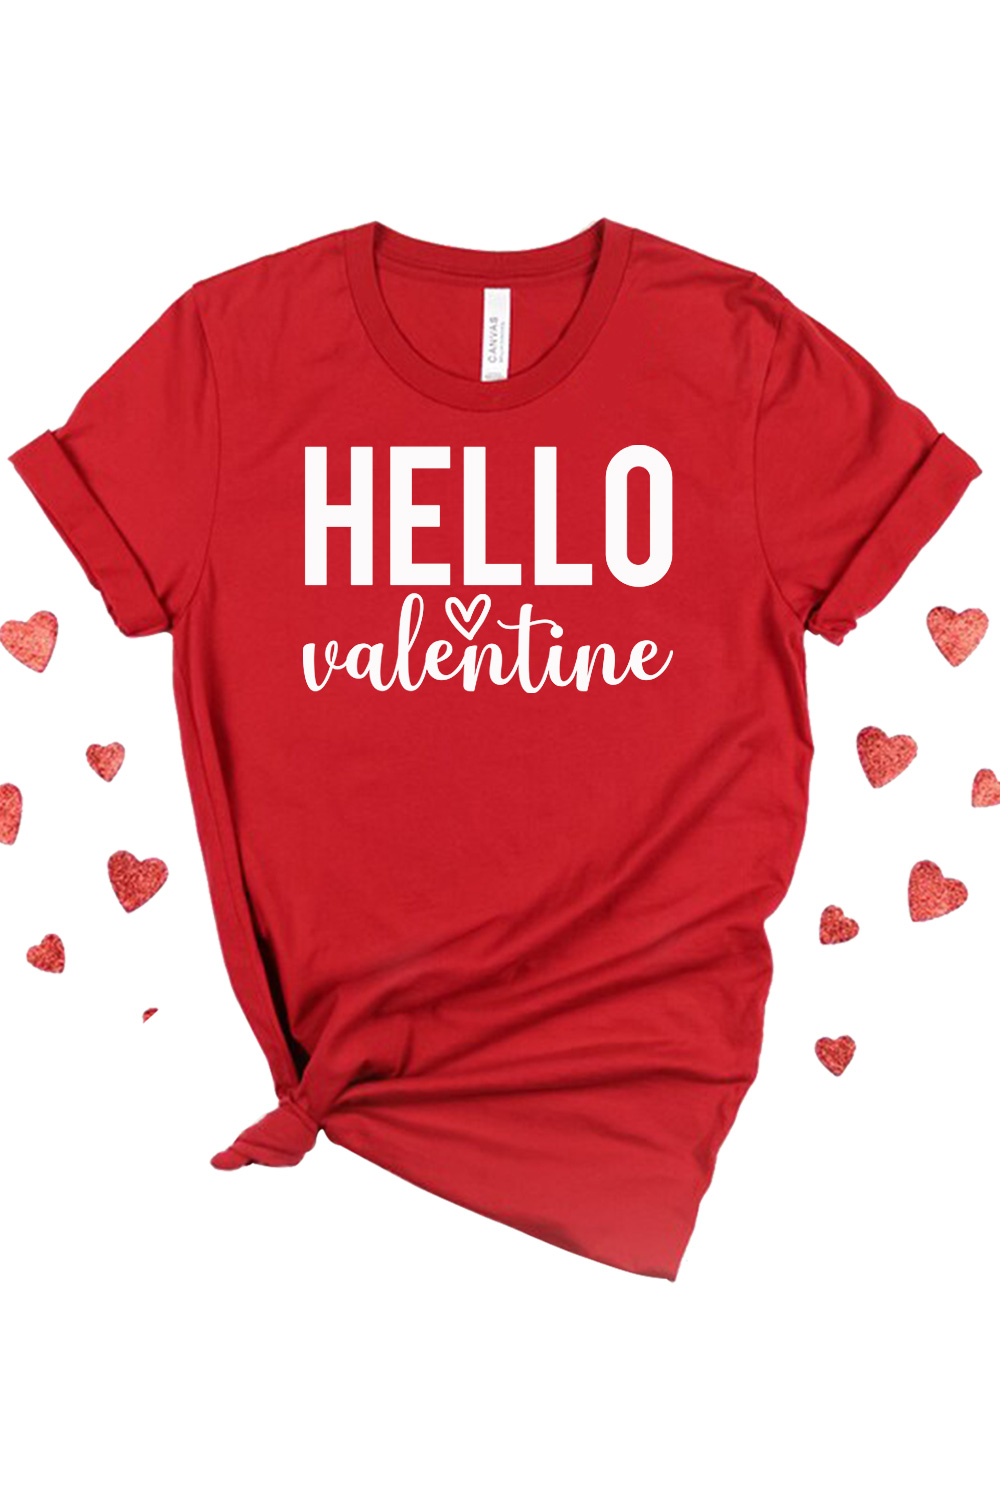 Image of a t-shirt with a unique inscription Hello Valentine